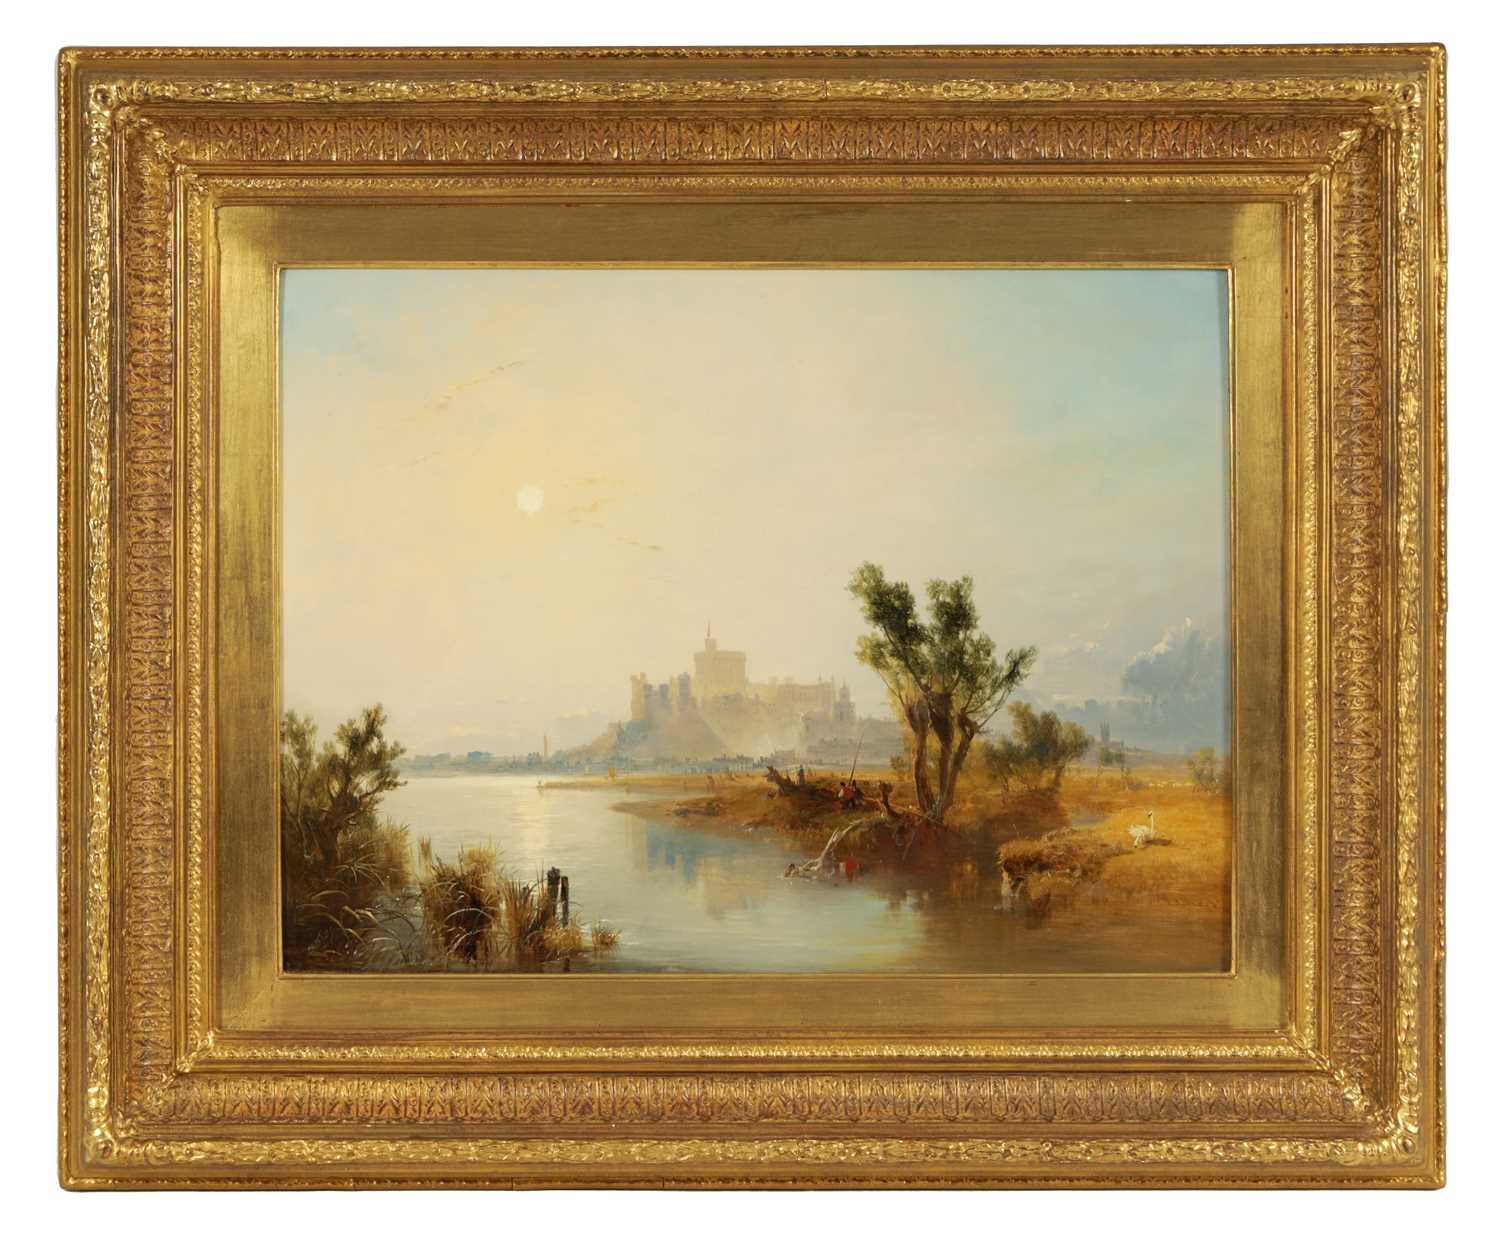 JAMES BAKER PYNE (1800-1870) OIL ON CANVAS